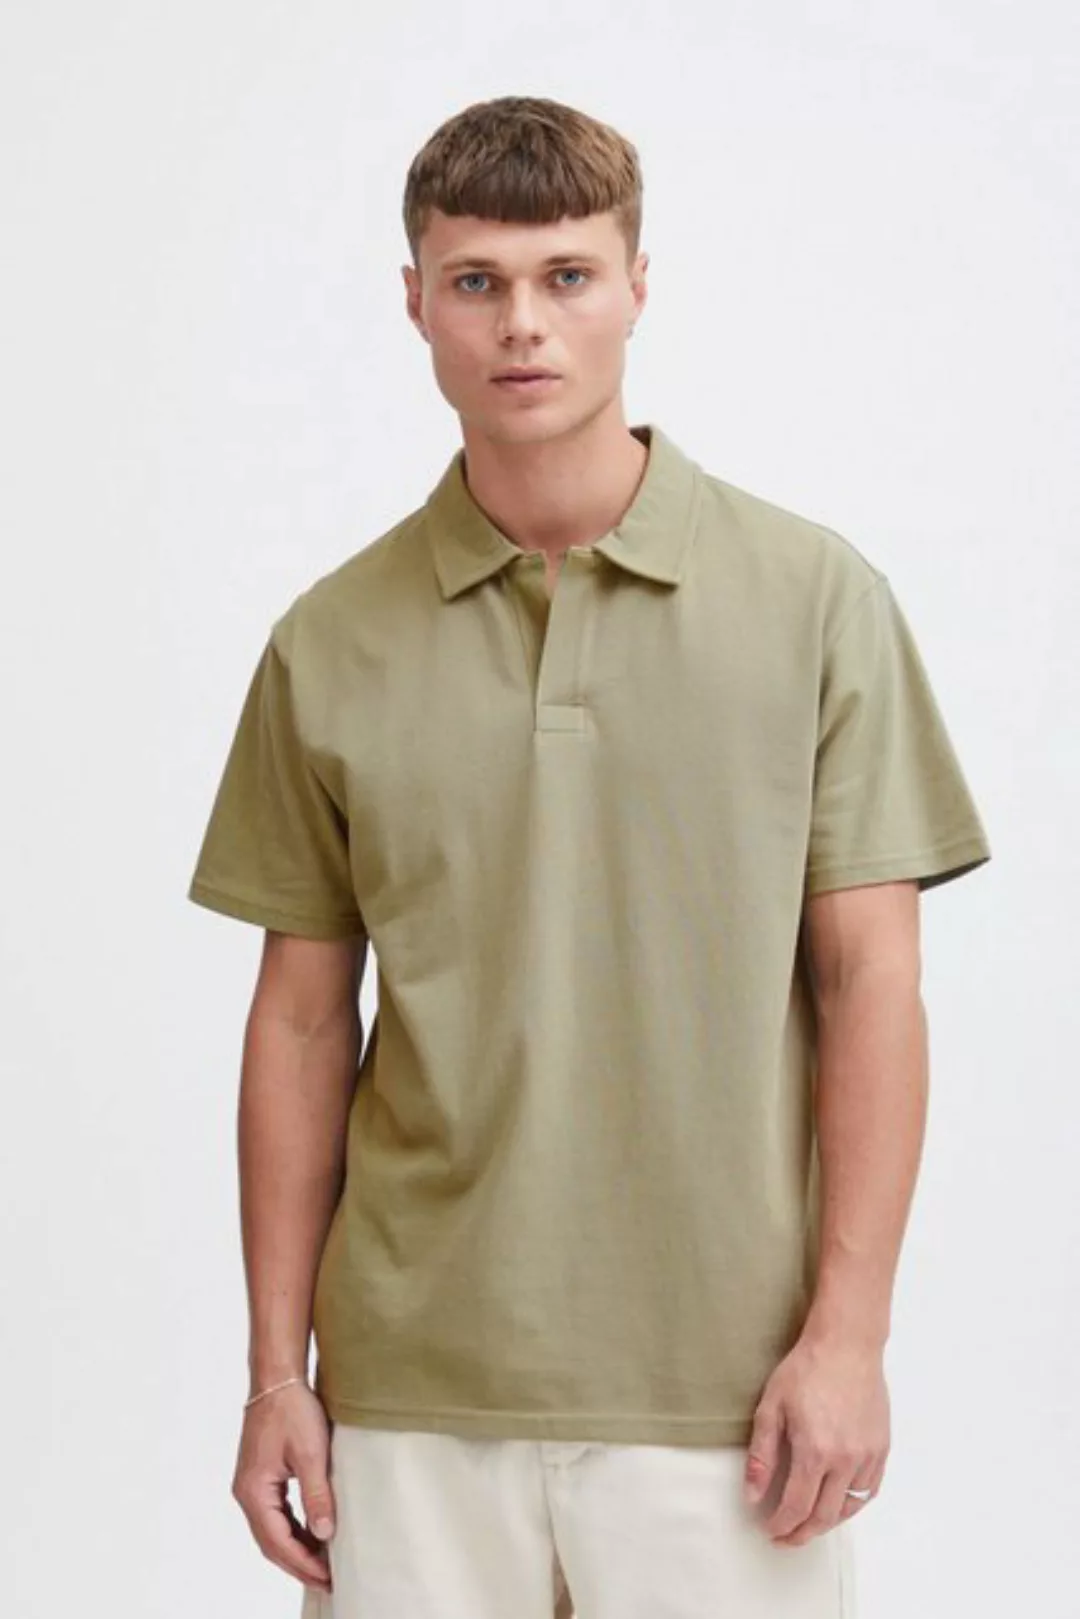 !Solid Poloshirt SDIhaab modisches Poloshirt günstig online kaufen